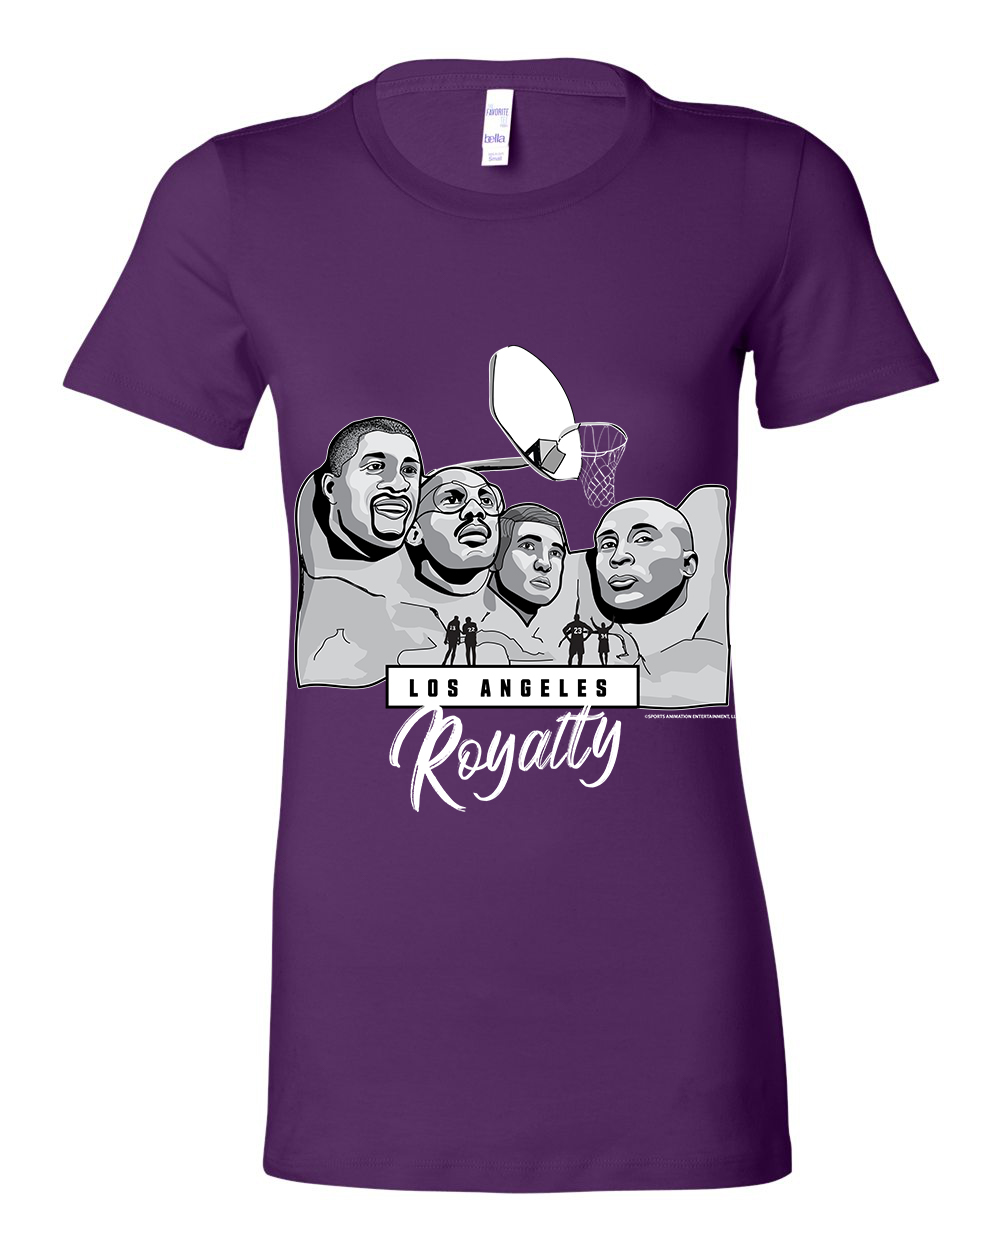 Mount Rushmore - Basketball Los Angeles Royalty (Purple Cotton) Women